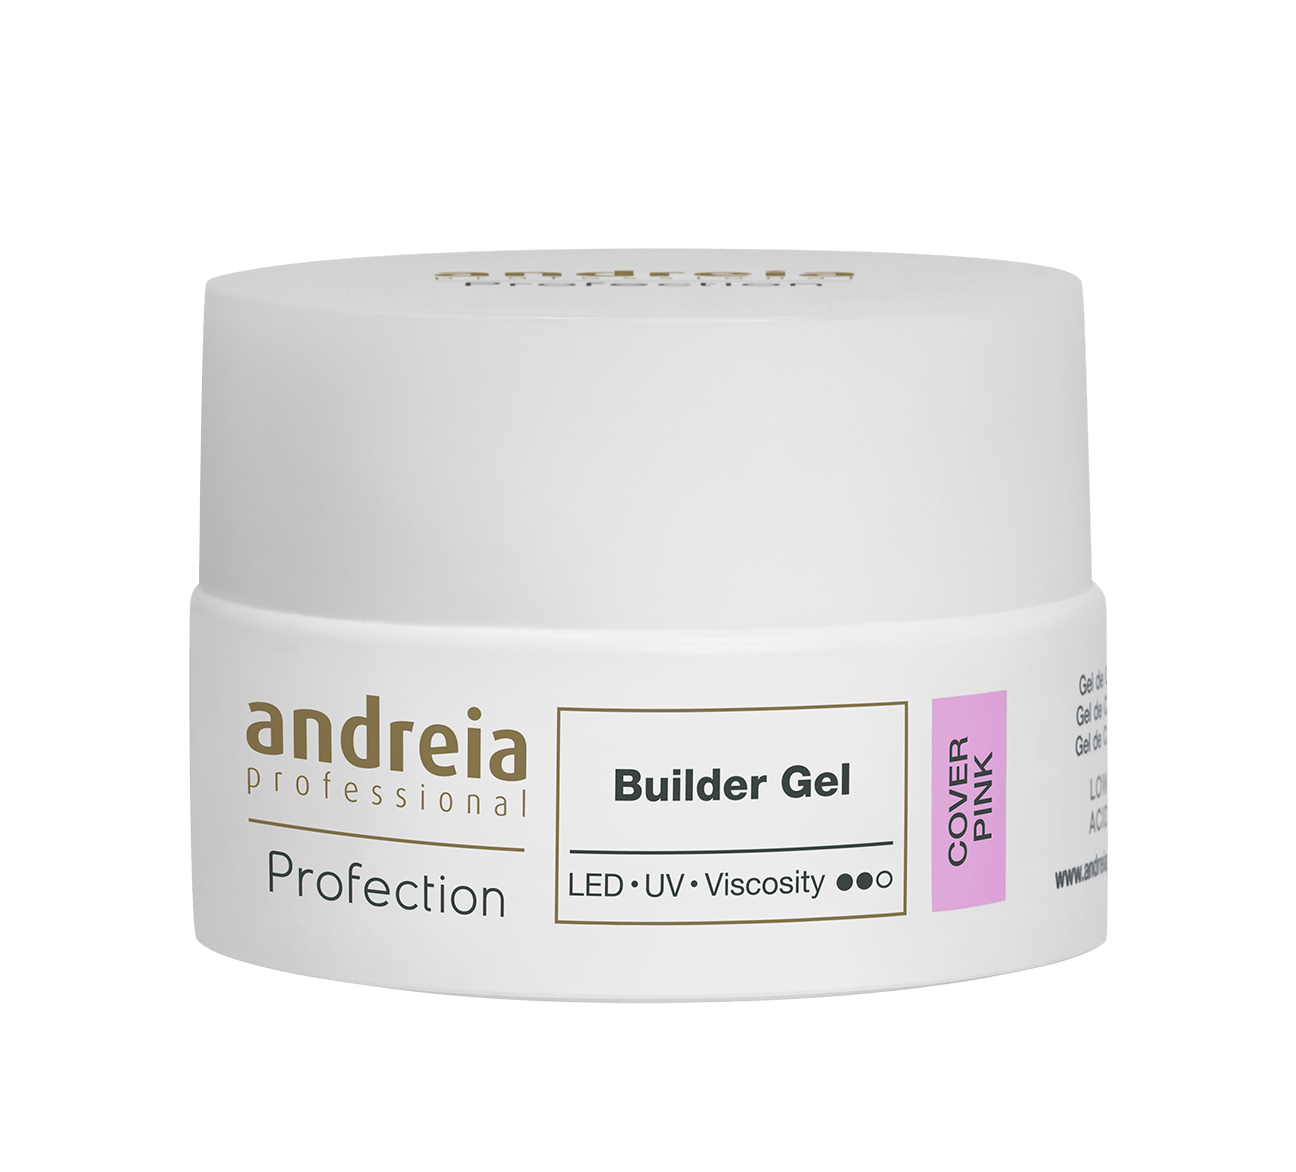 Andreia Professional Profection Builder Gel Cover Pink 22g